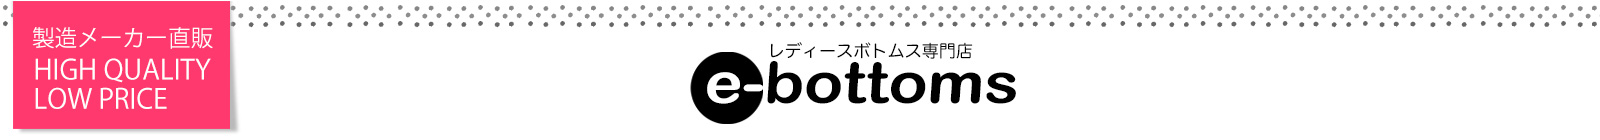 e-bottoms イーボトムス